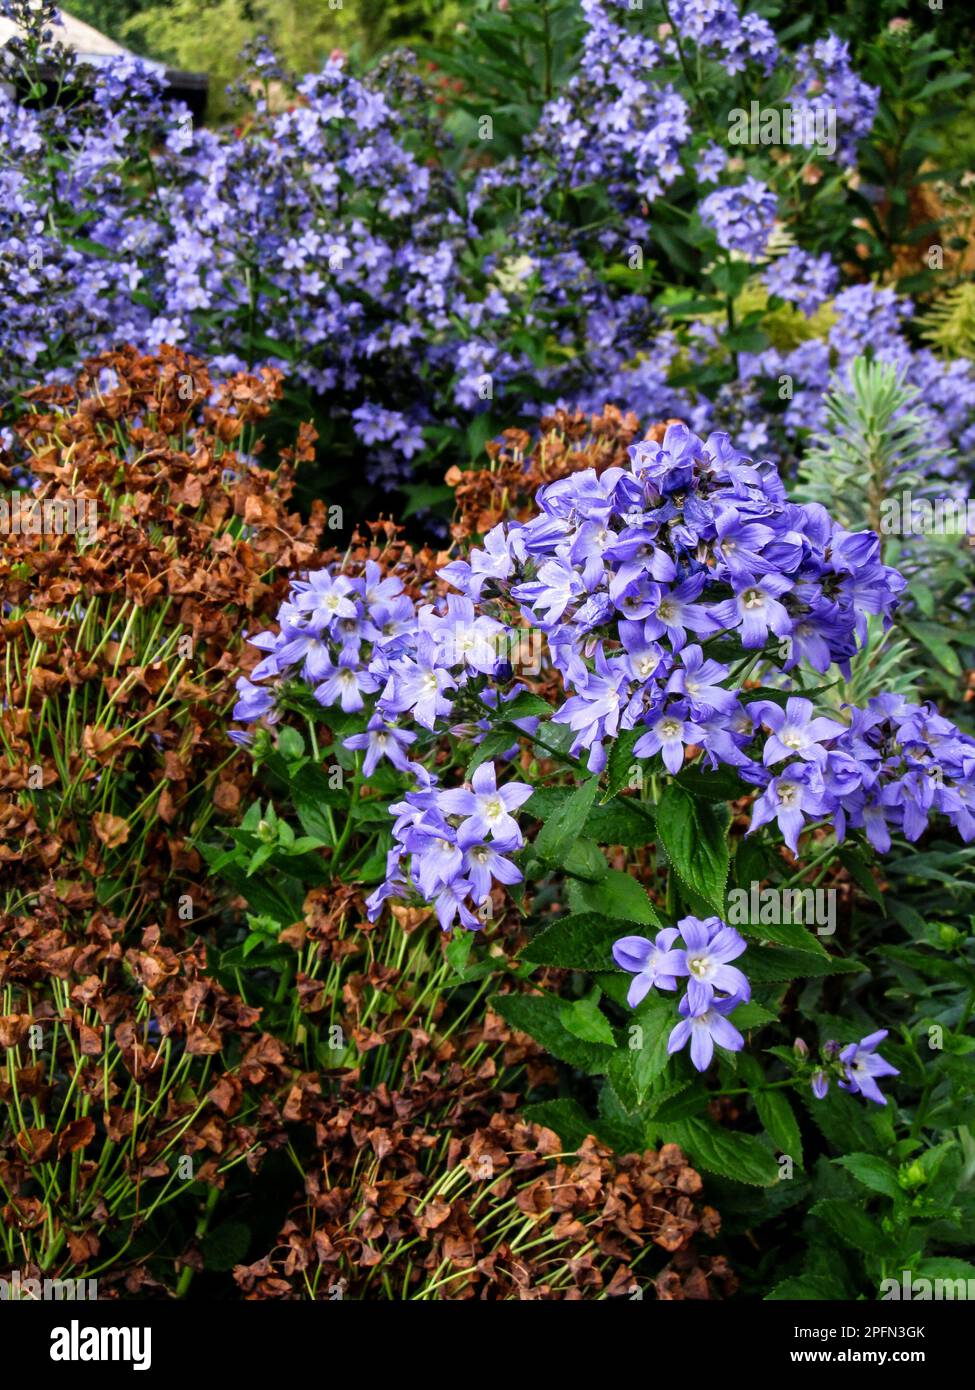 The last blue Campanula flowers of the season. Stock Photo